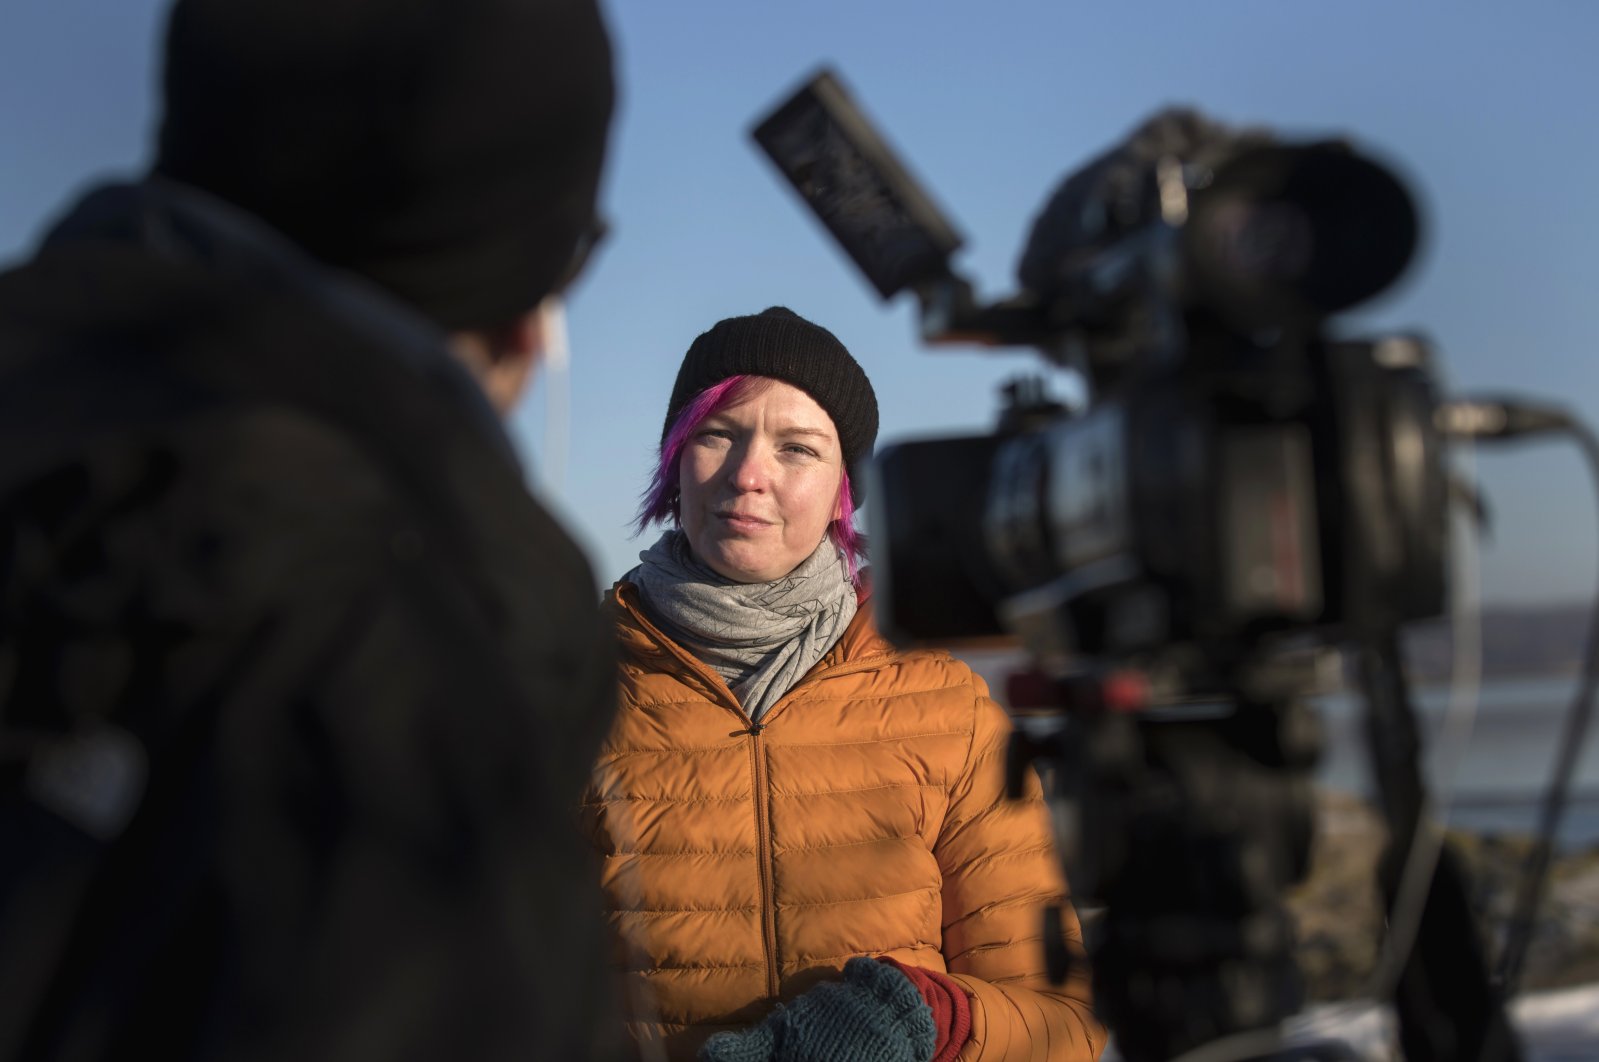 Lisa Enroth is interviewed by the Associated Press, on the island of Hamneskar, western Sweden on Saturday, Jan. 30, 2021. (AP Photo/Thomas Johansson)